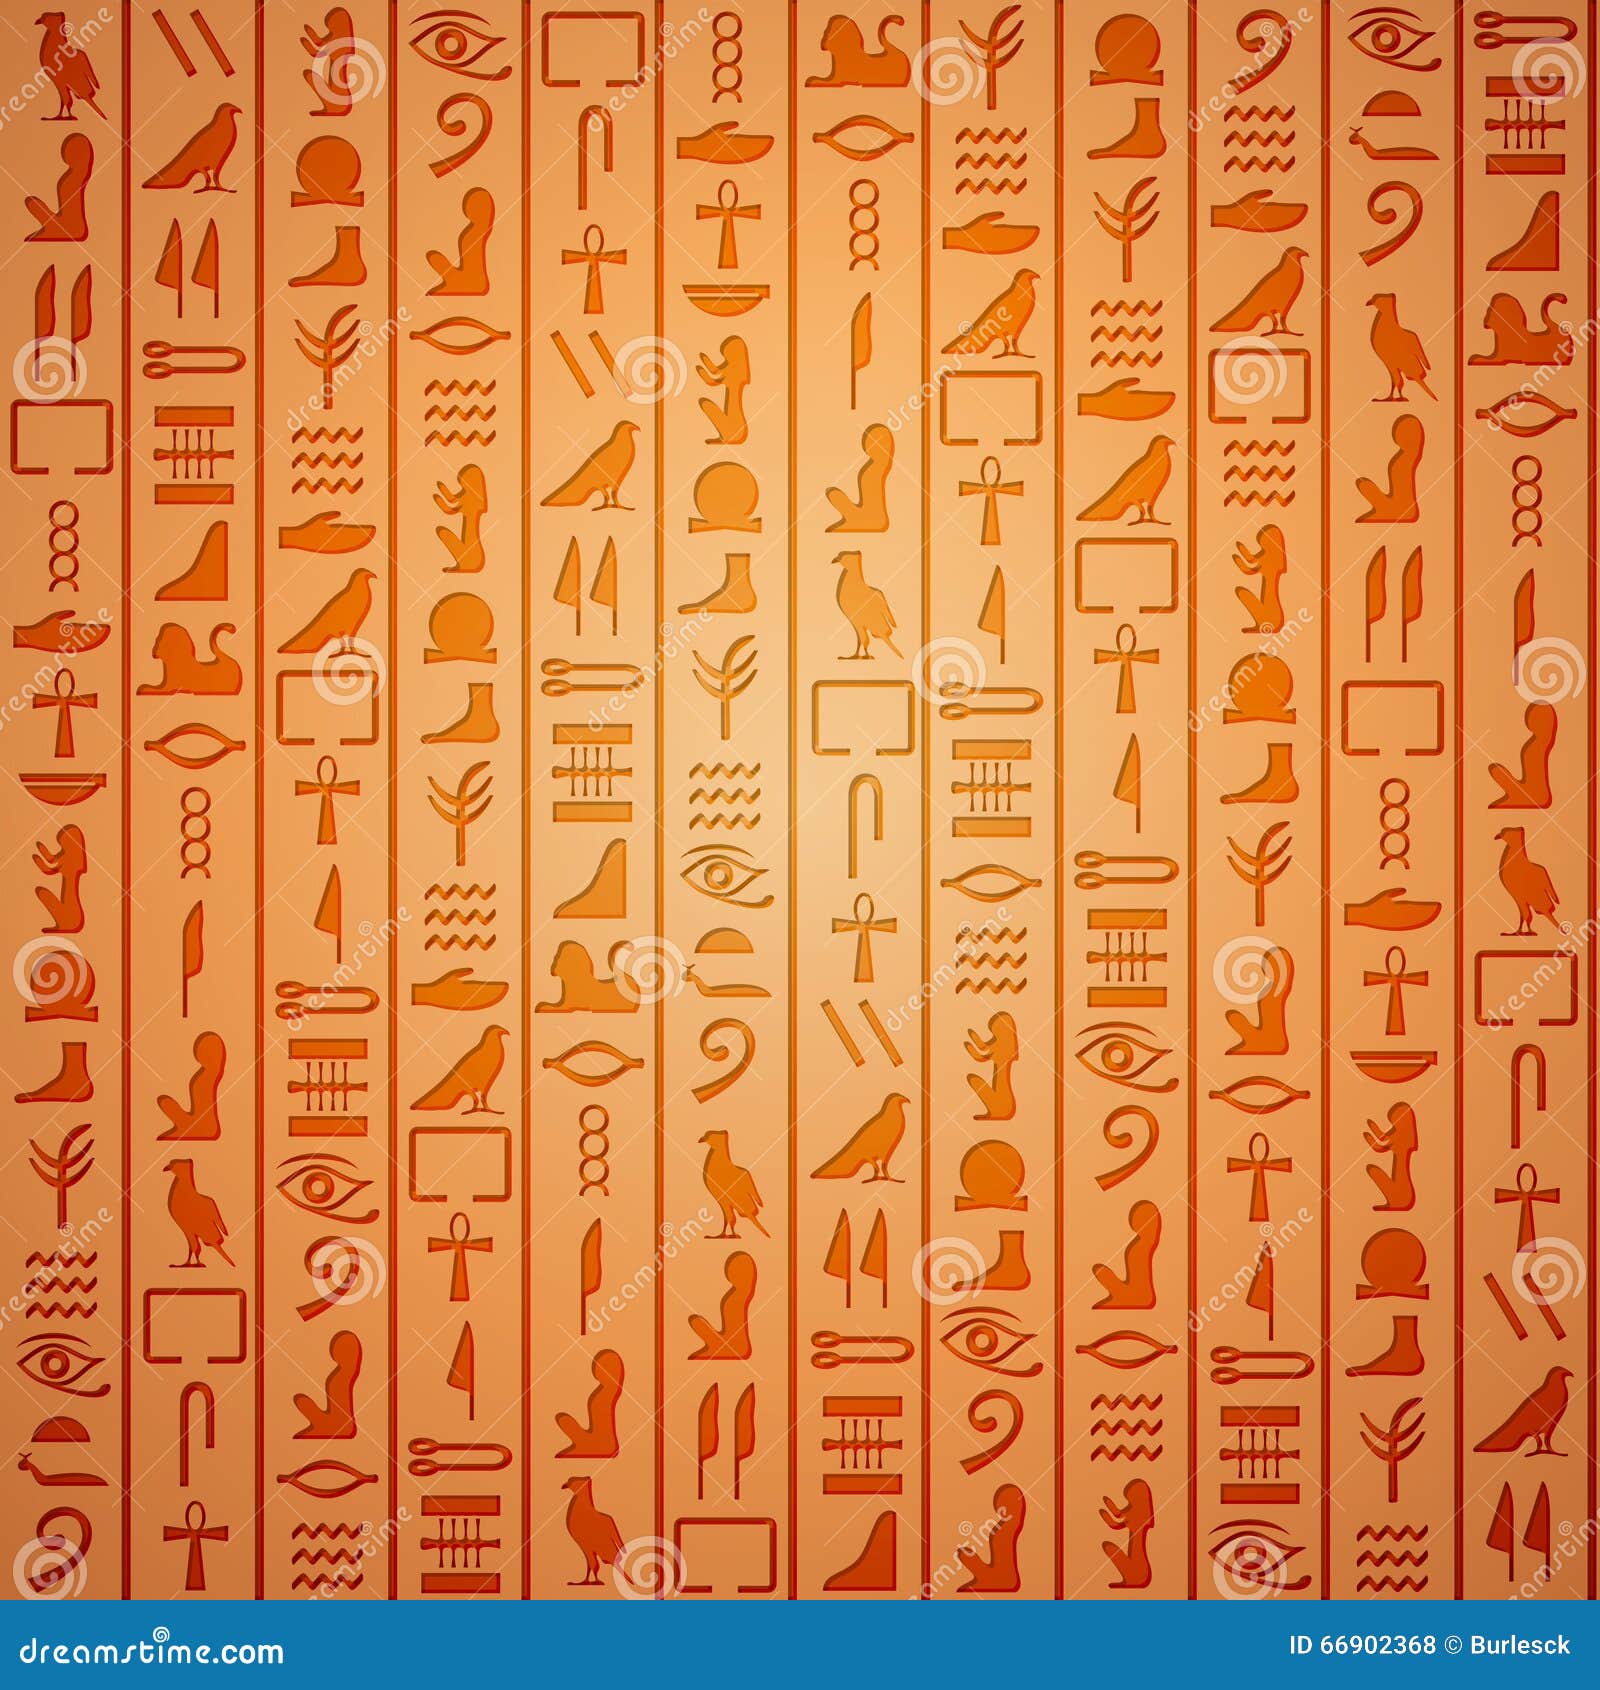 egyptian hieroglyphics background